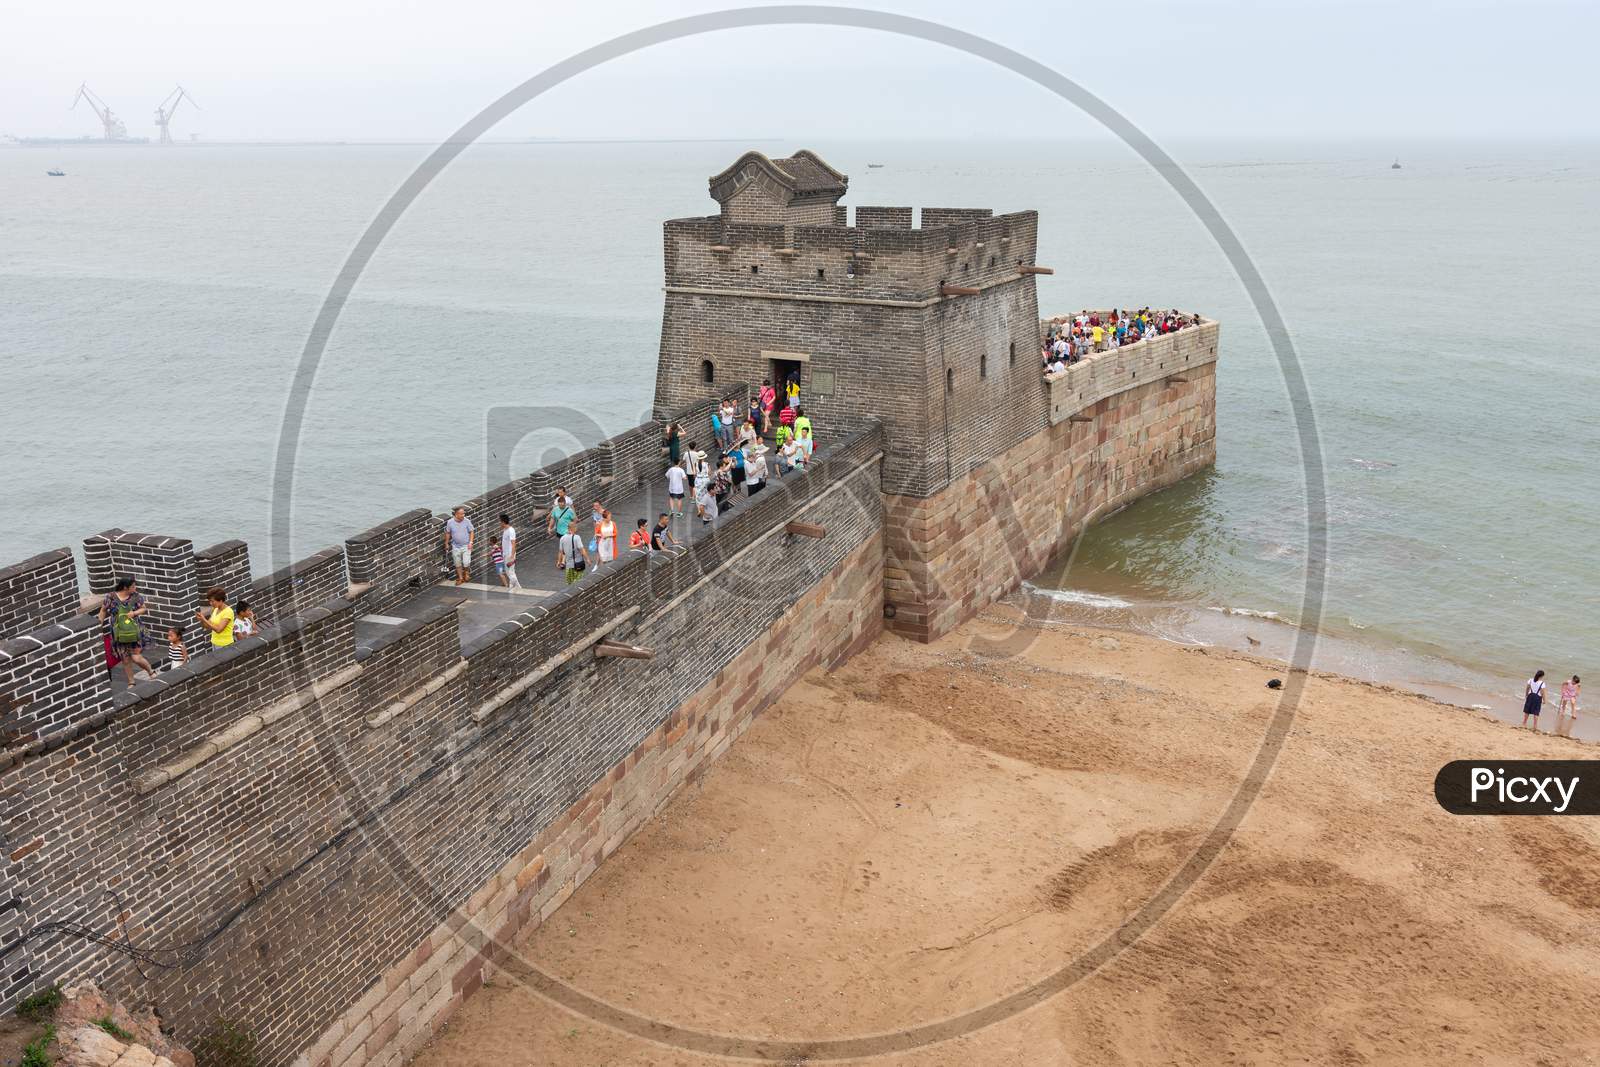 Laolongtou Great Wall (Old Dragon'S Head), Great Wall Of China Meets Bohai Sea